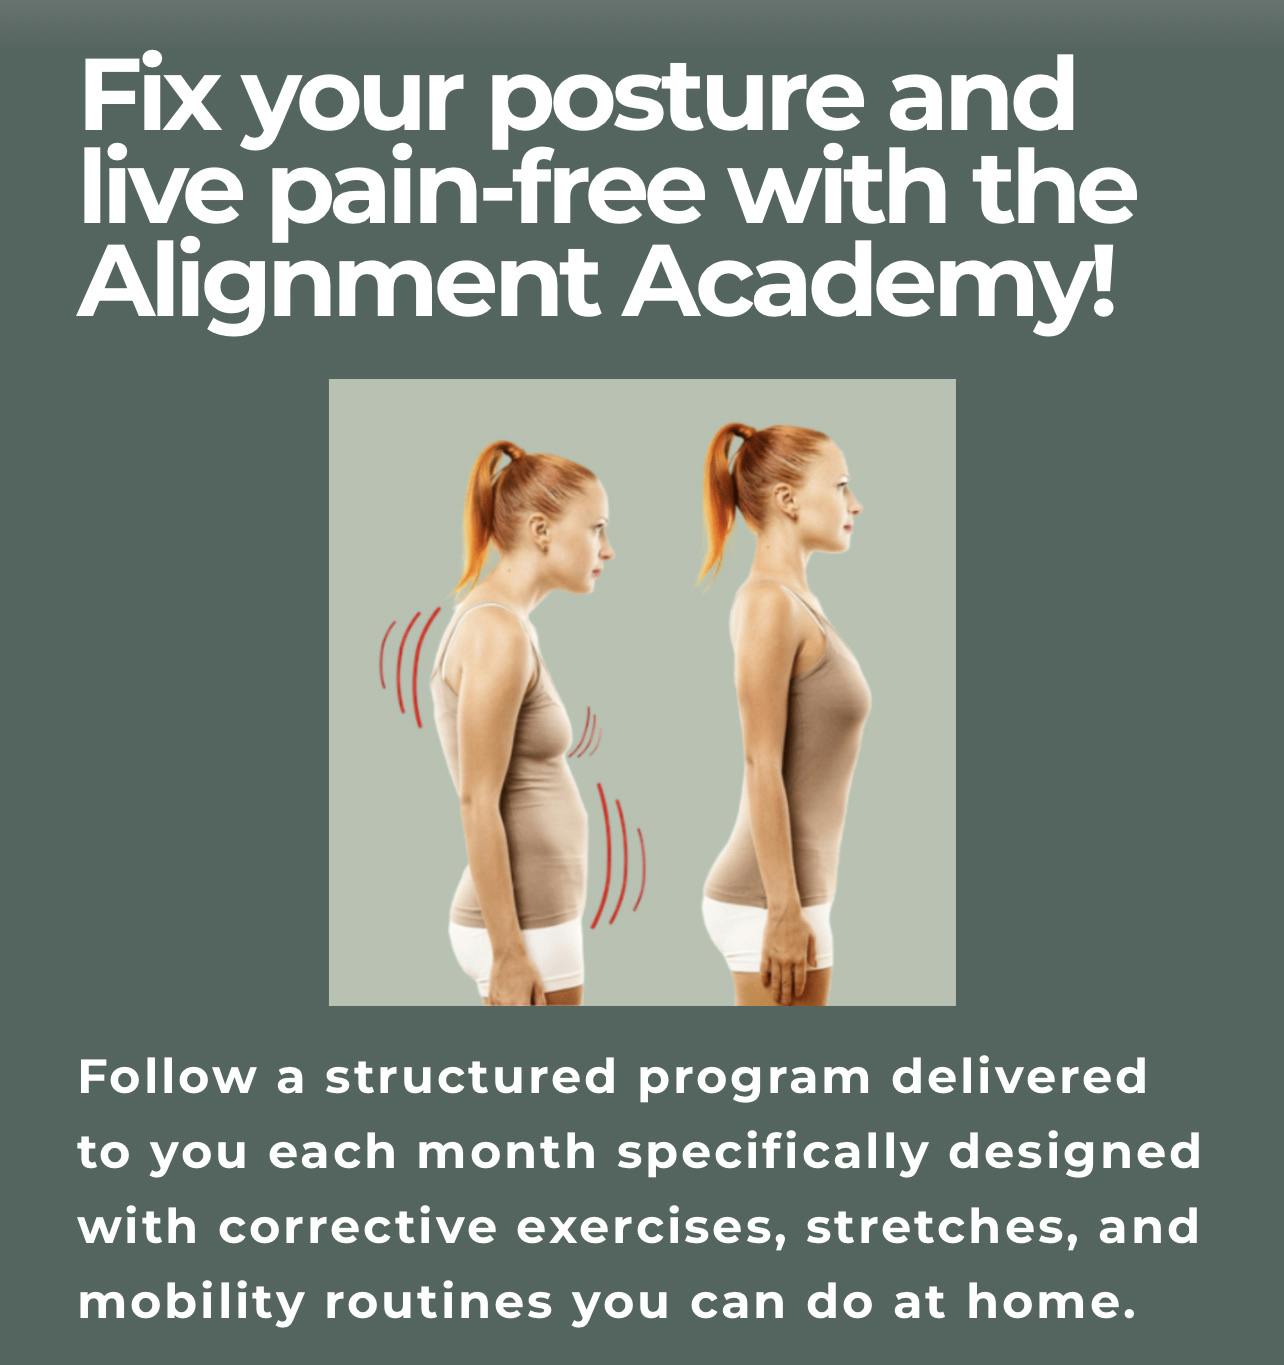 AlignmentAcademy posture correction program